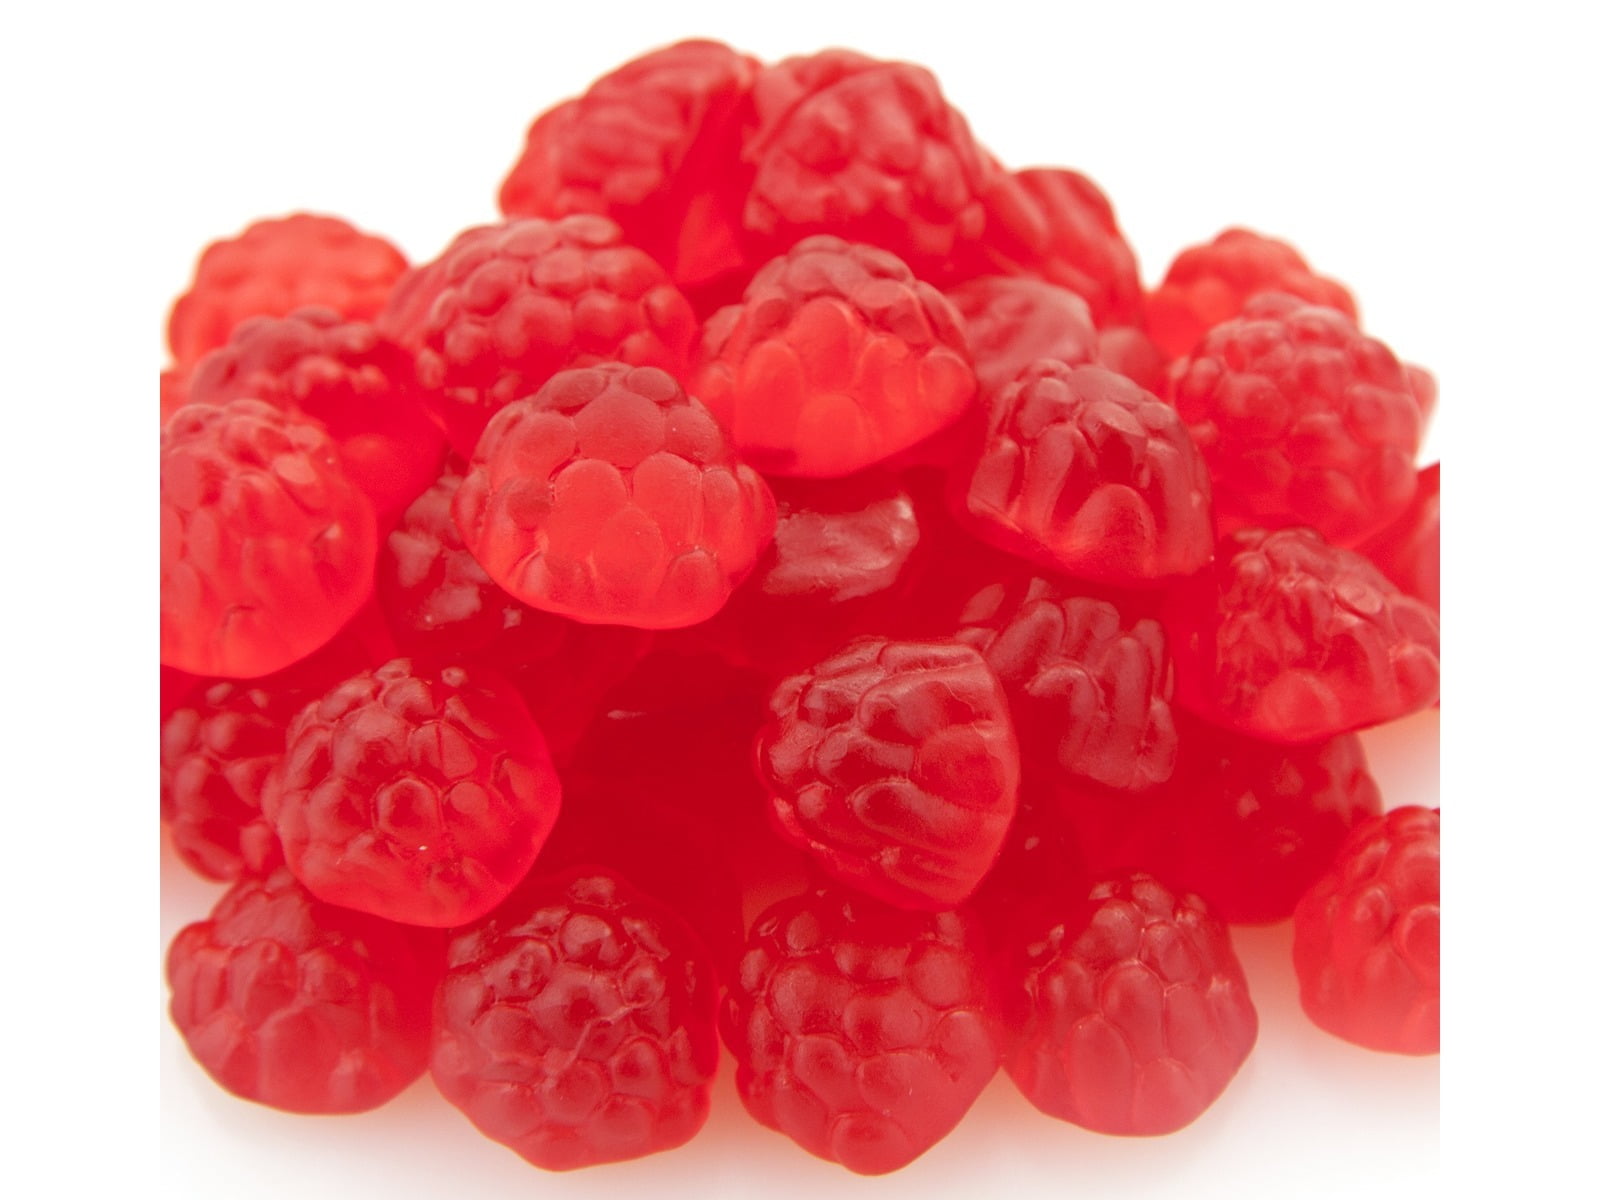 Gummi Red Raspberries 2 pounds bulk gummy candy - Walmart.com